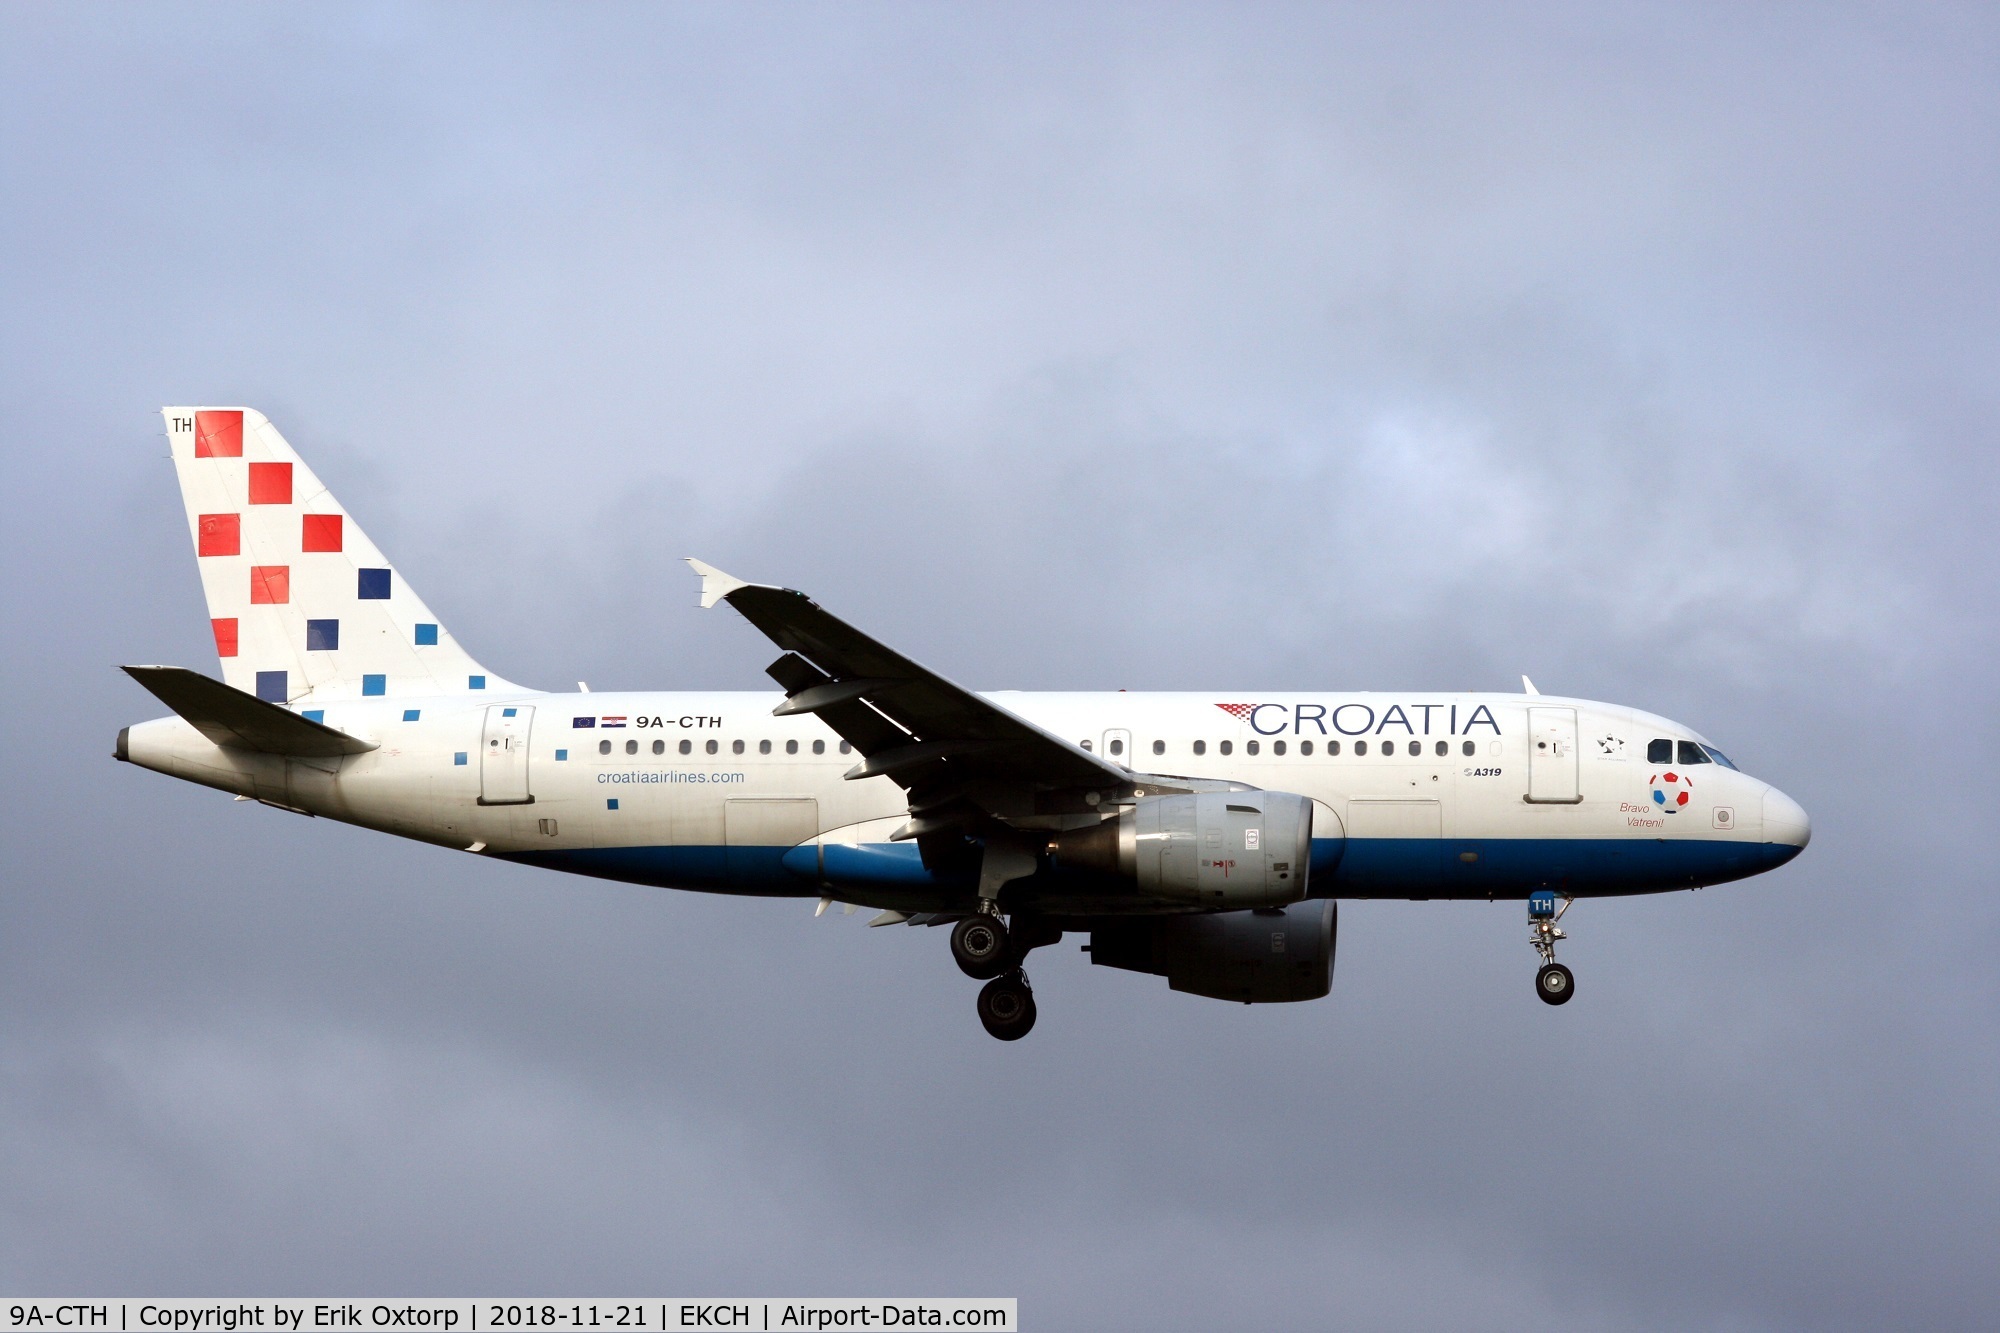 9A-CTH, 1998 Airbus A319-112 C/N 833, 9A-CTH landing rw 04L